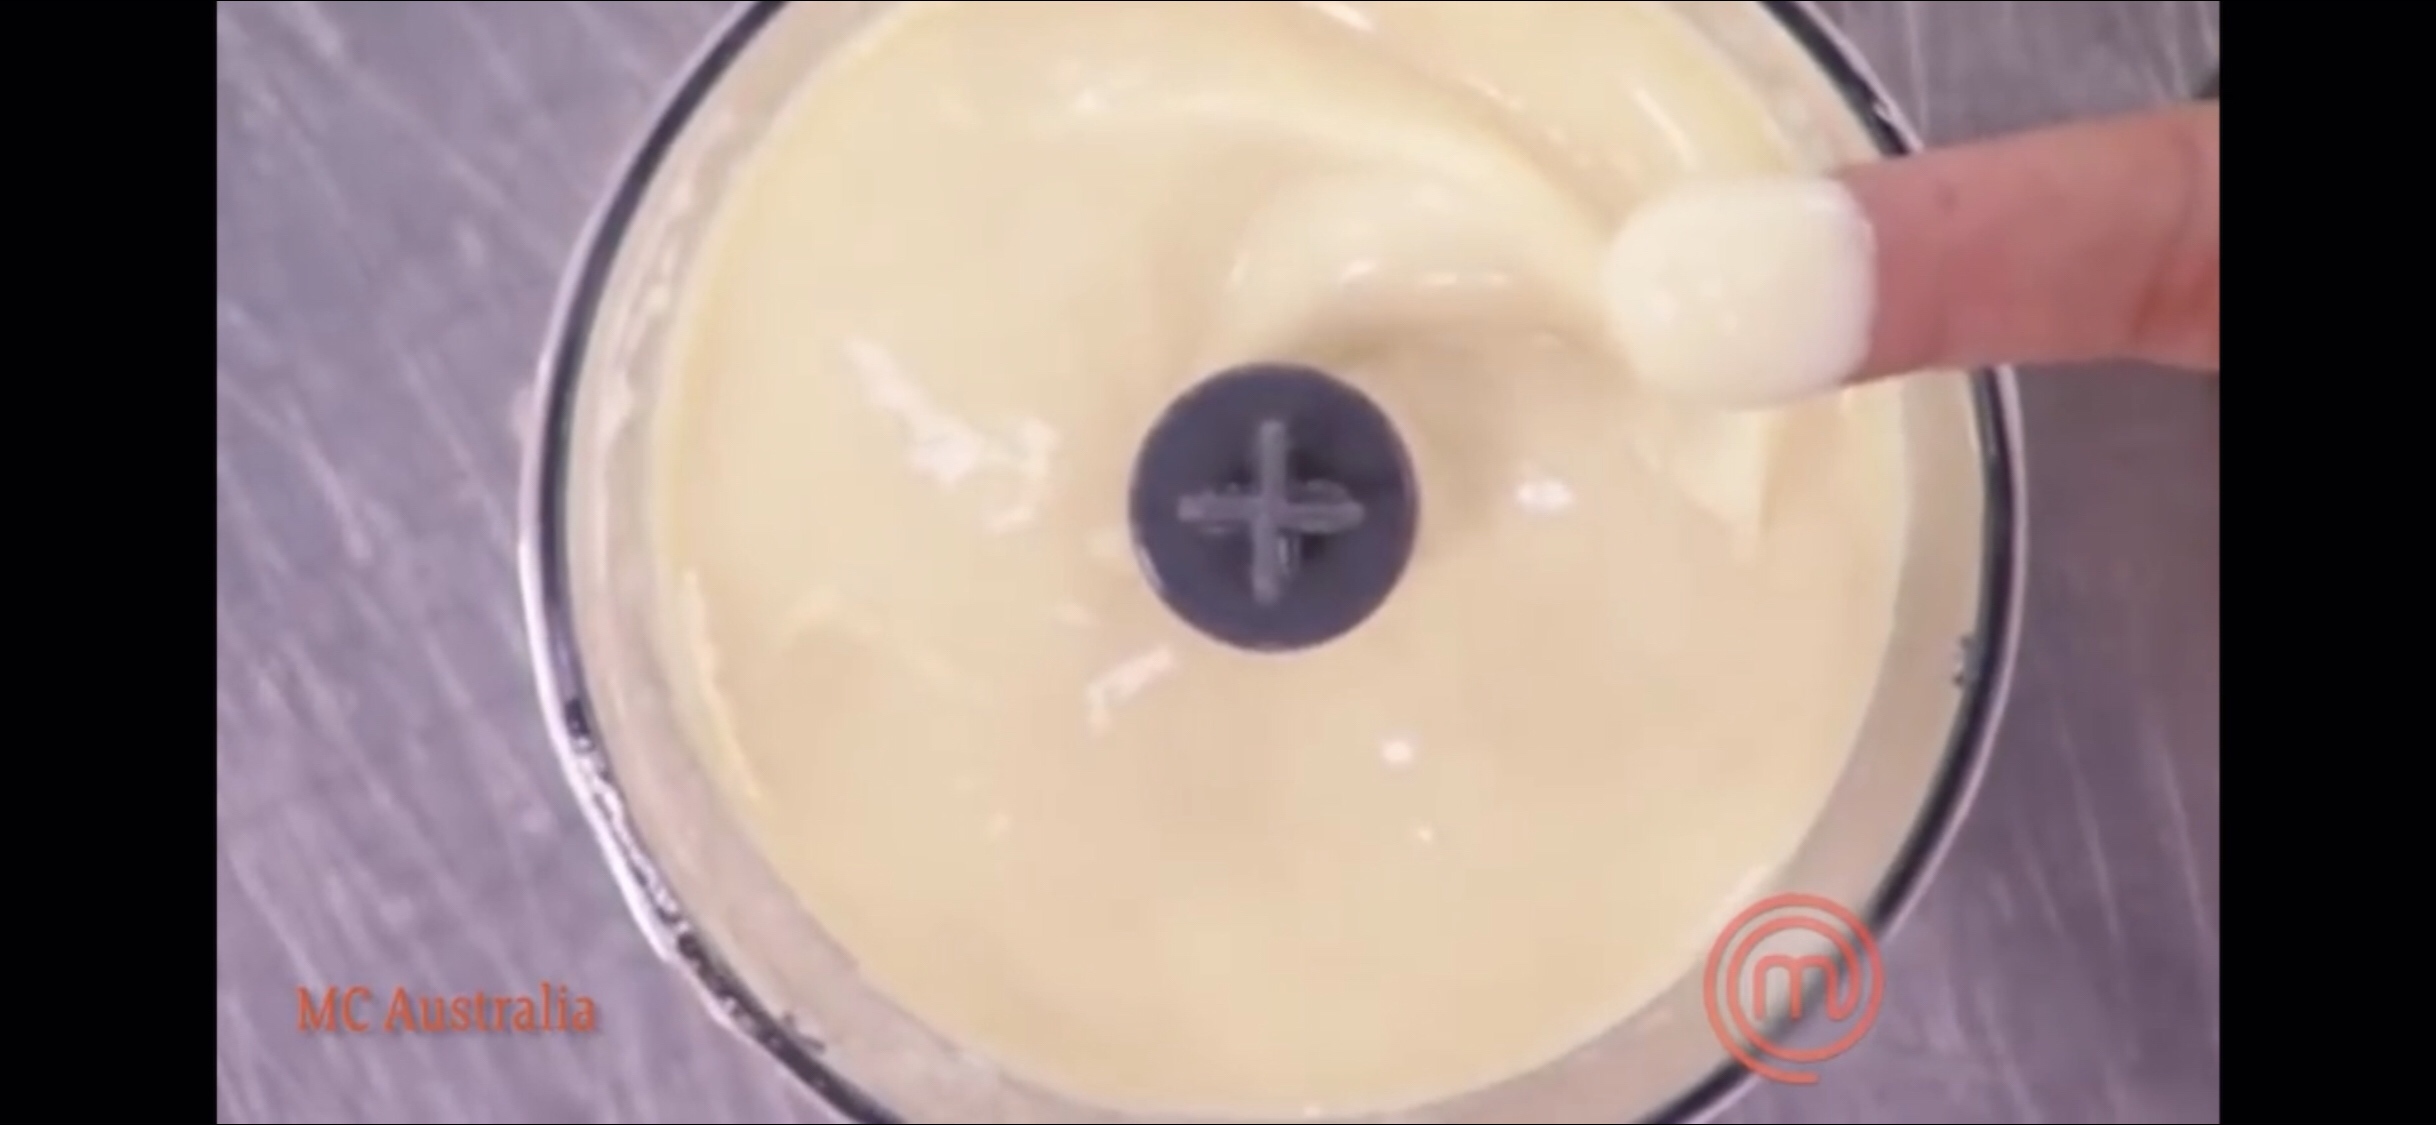 Gary Mehigan之史上最简单40秒美乃滋/蛋黄酱的做法